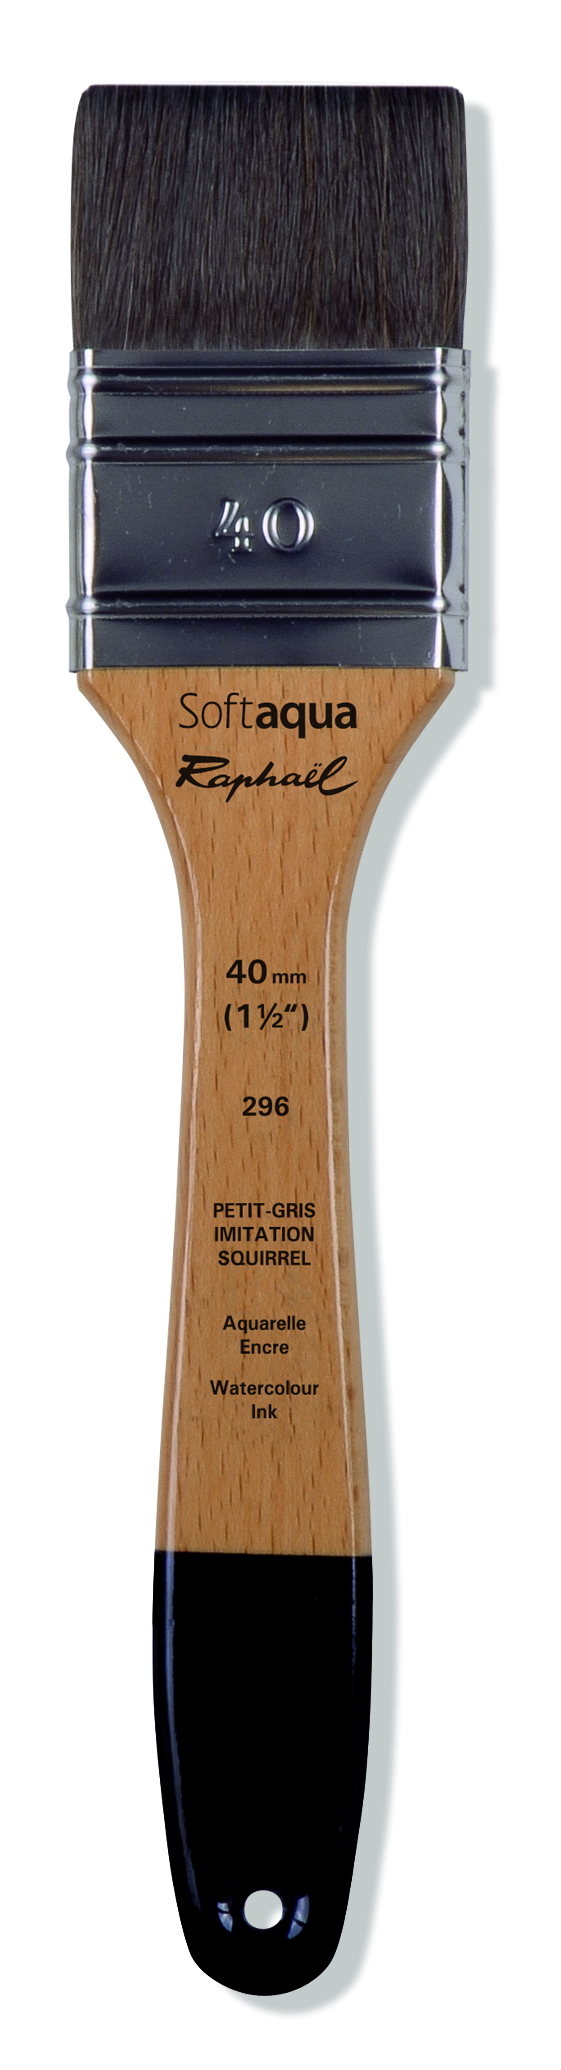 Raphael SOFTAQUA flat brush 296